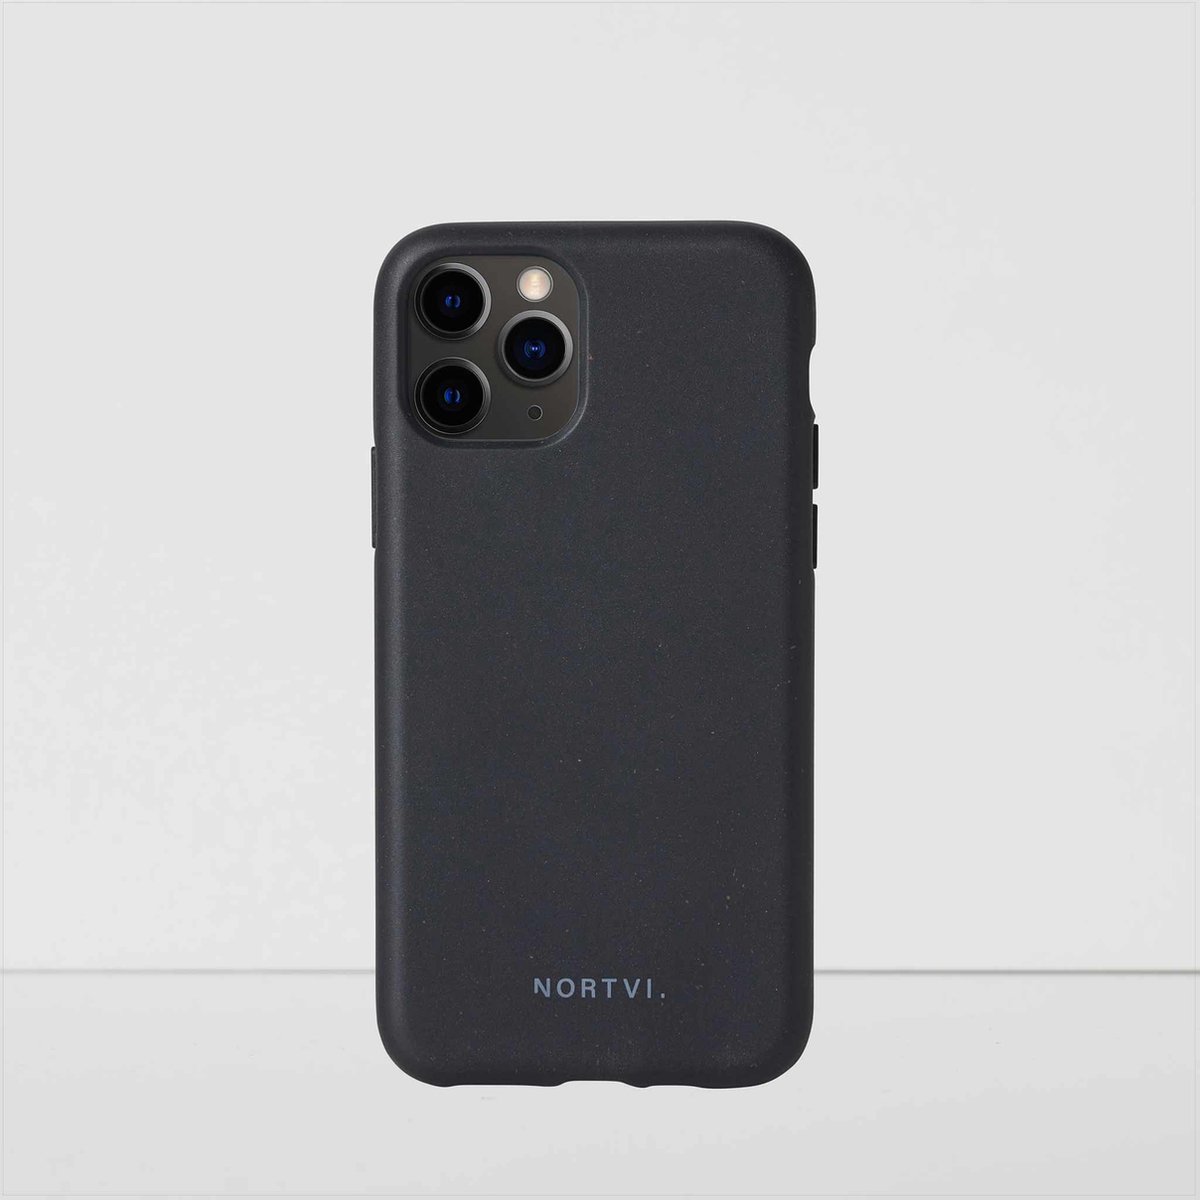 NORTVI iPhone 11 Pro Max hoesje | Zwart | Sterk, Duurzaam & Fashionable